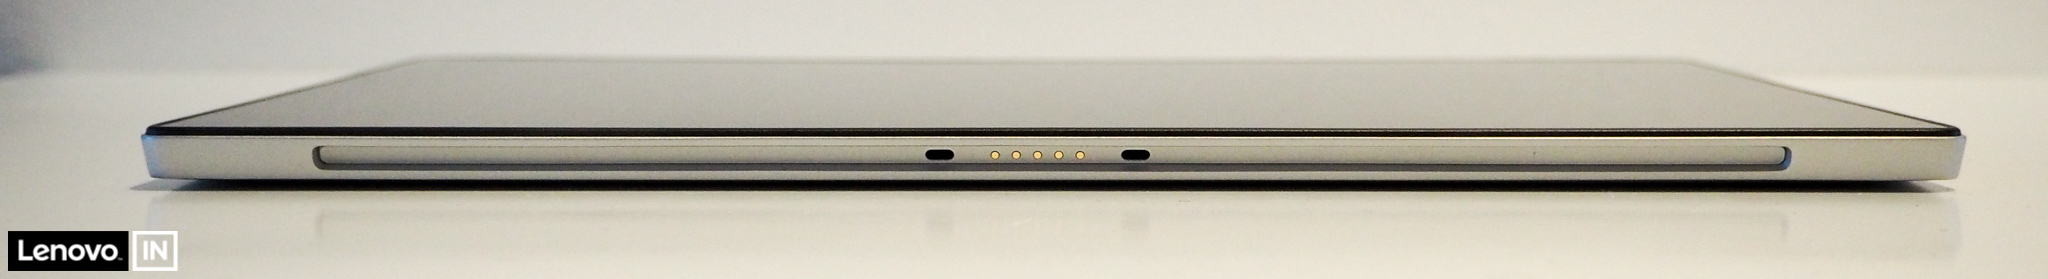 Tablette PC 2-en-1 Lenovo Miix 510 Silver (80XE00C4FE) 